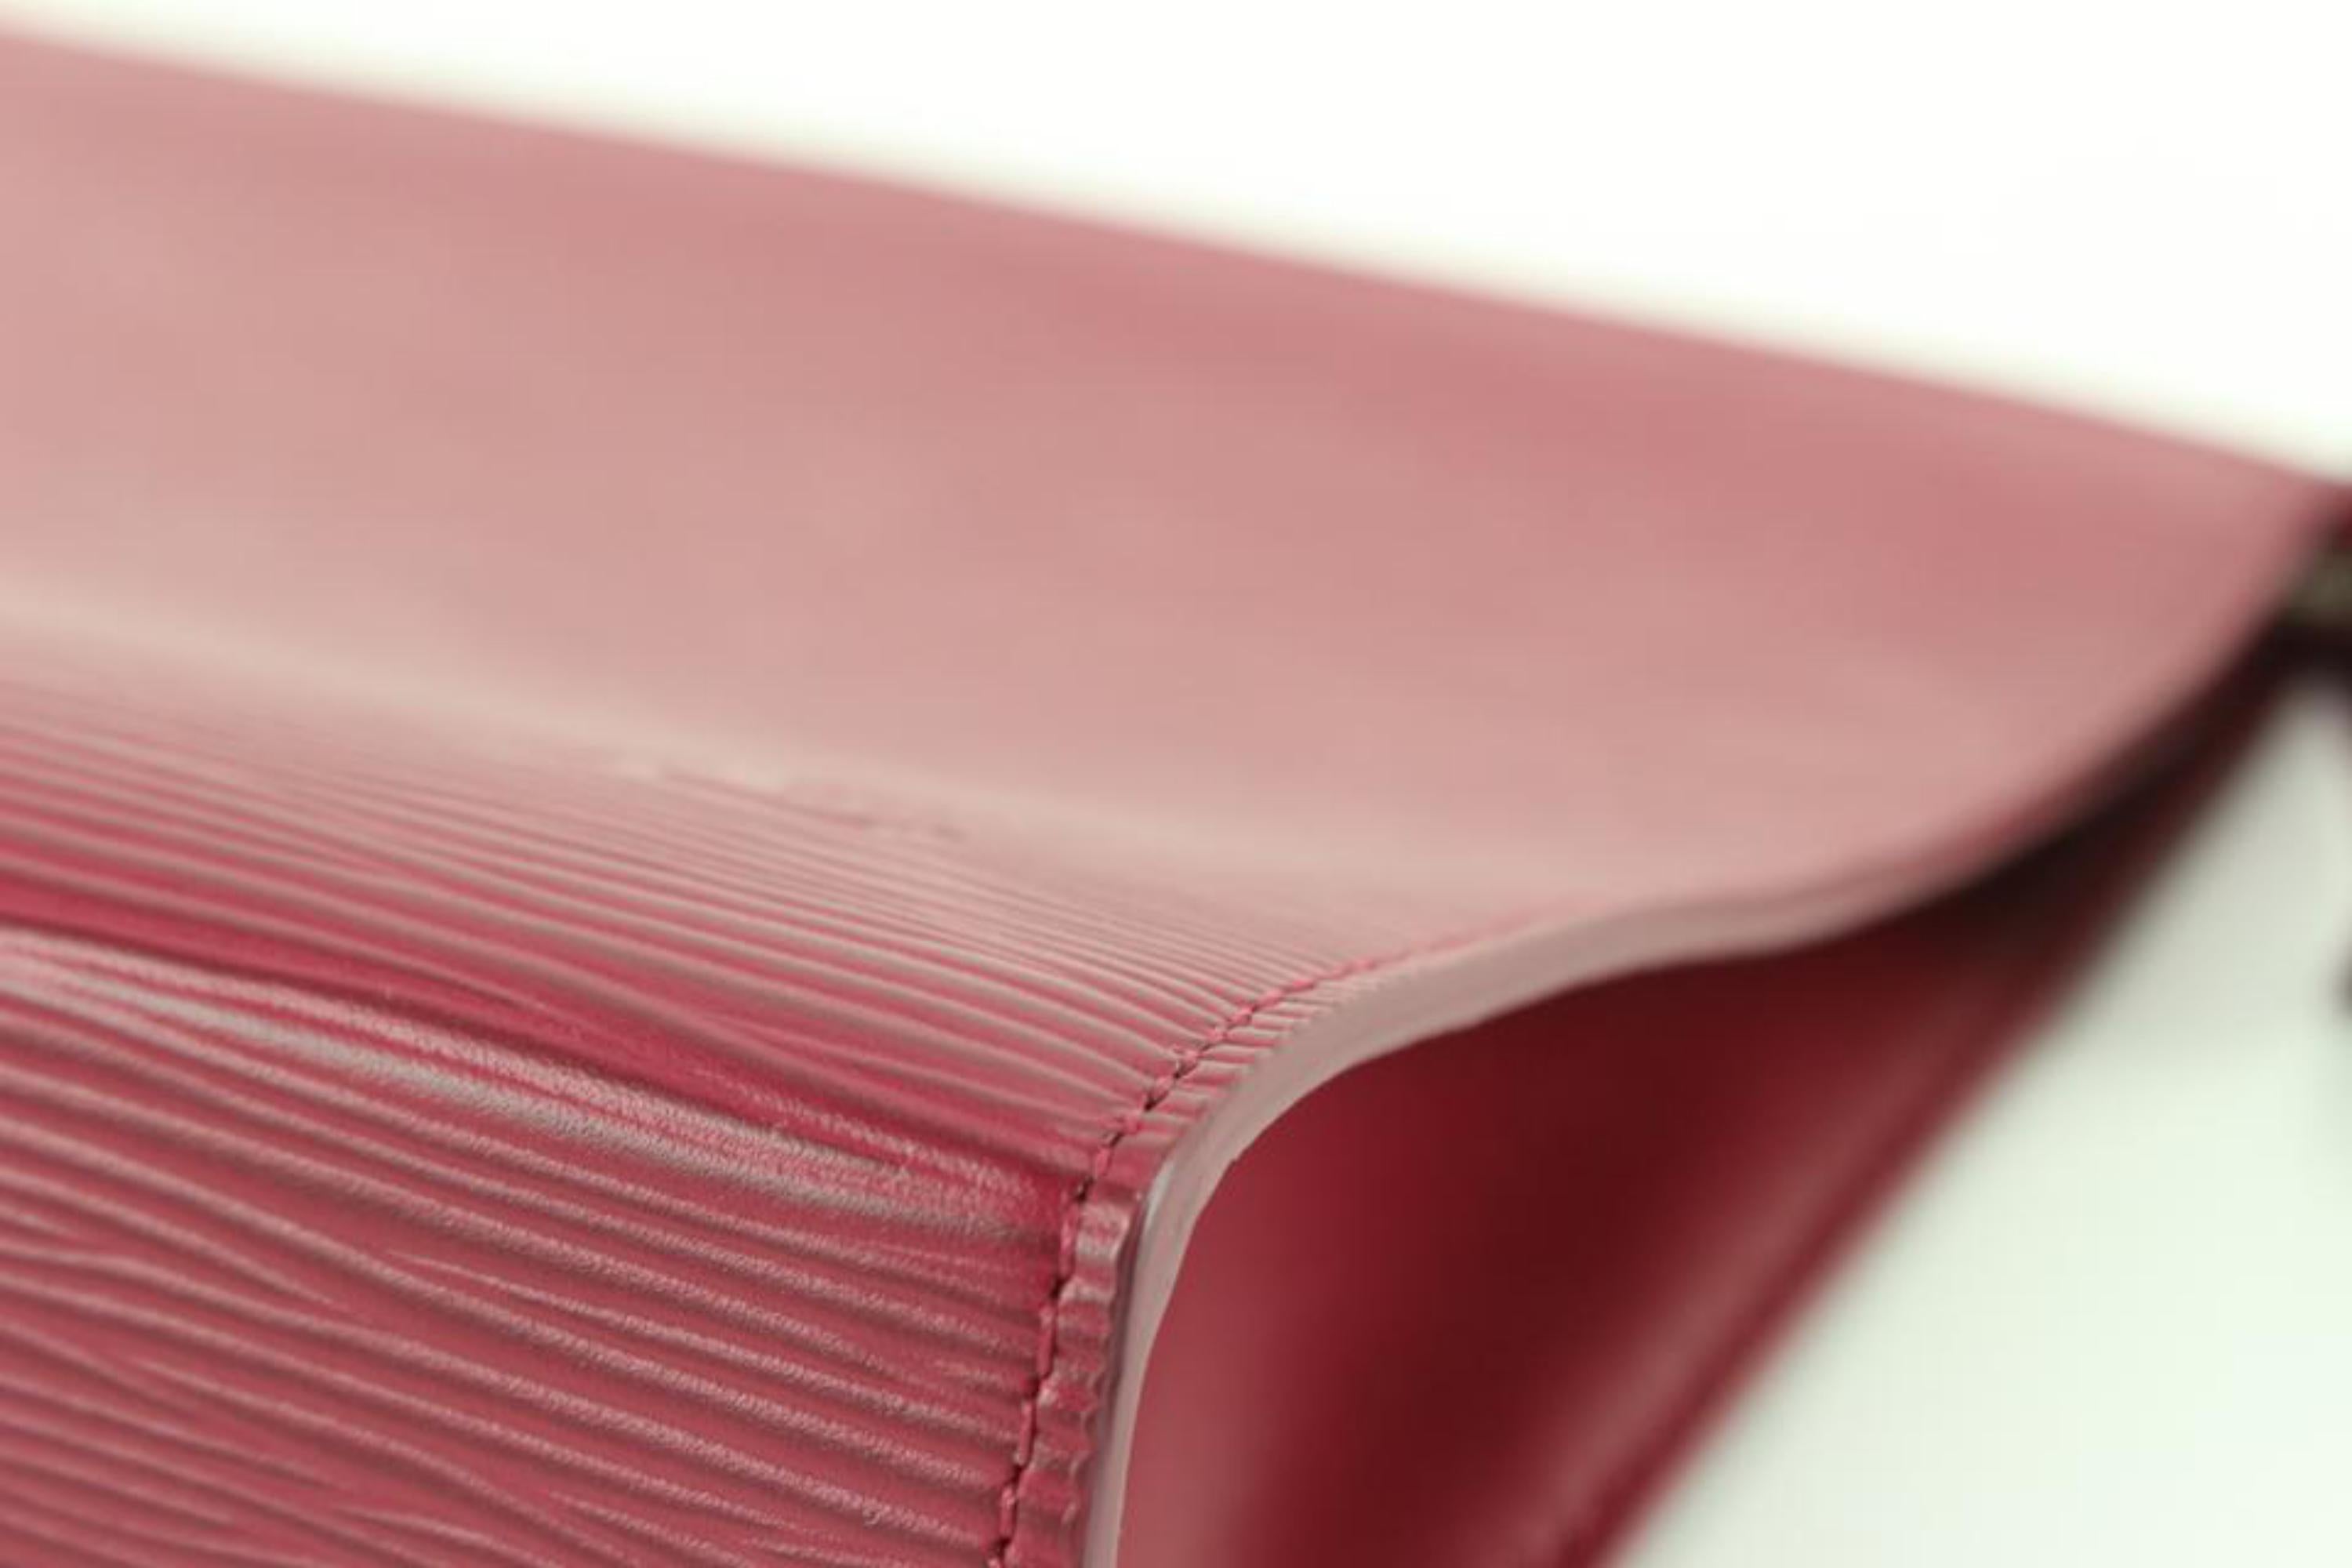 Louis Vuitton Speedy Handbag 392431